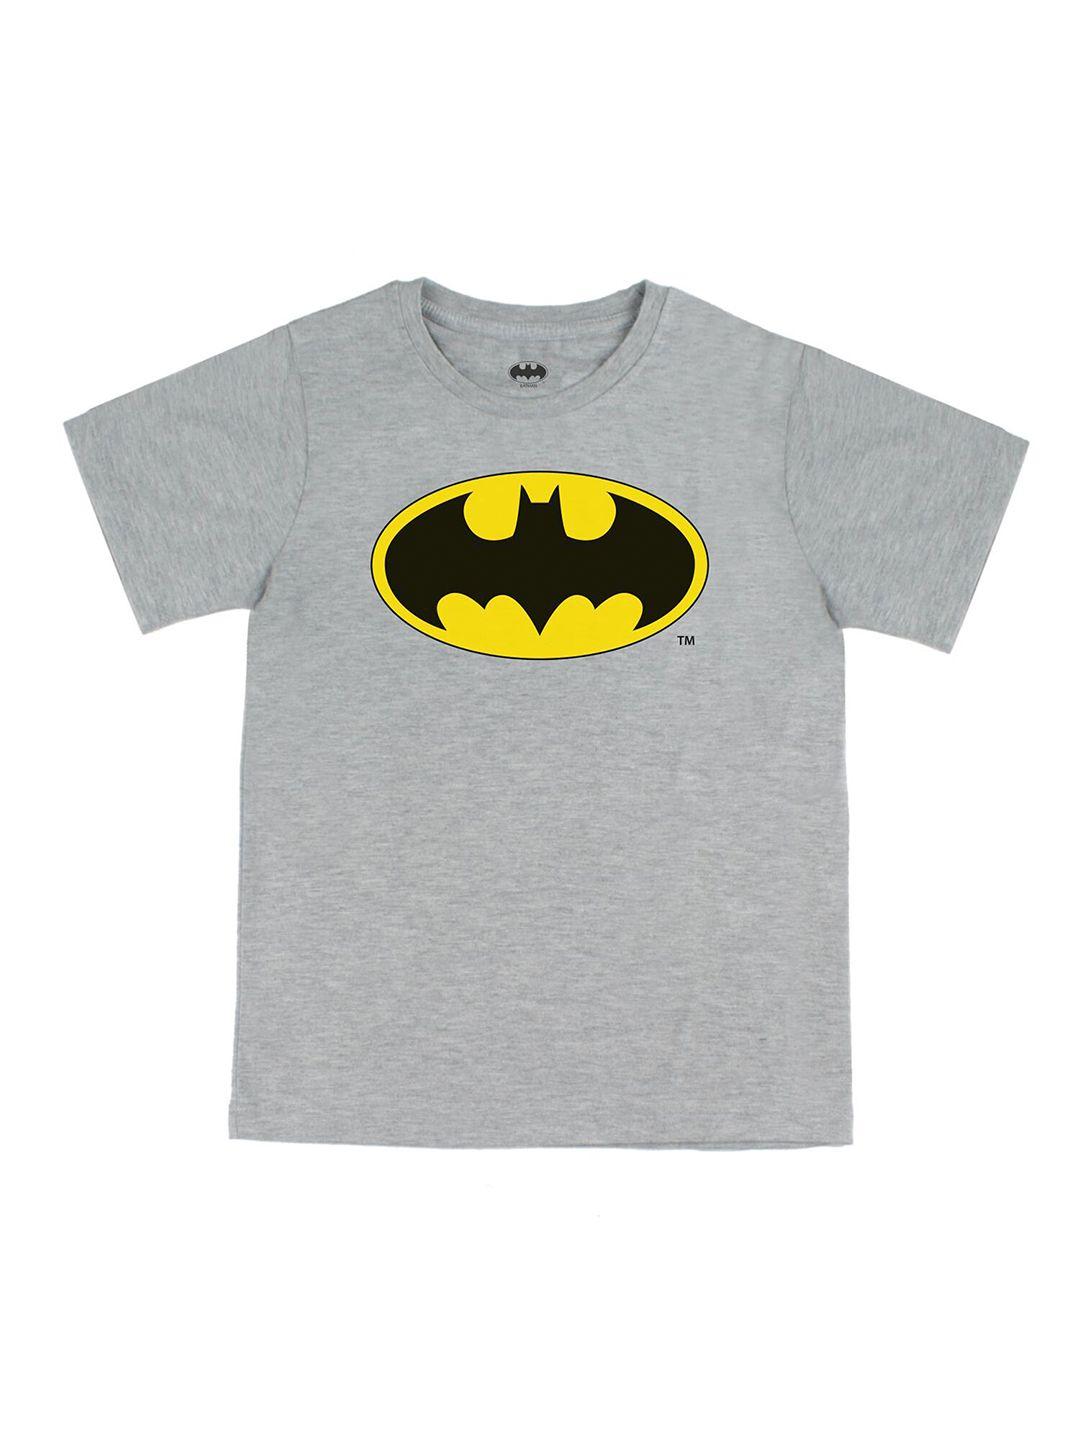 dc by wear your mind boys grey batman printed applique t-shirt